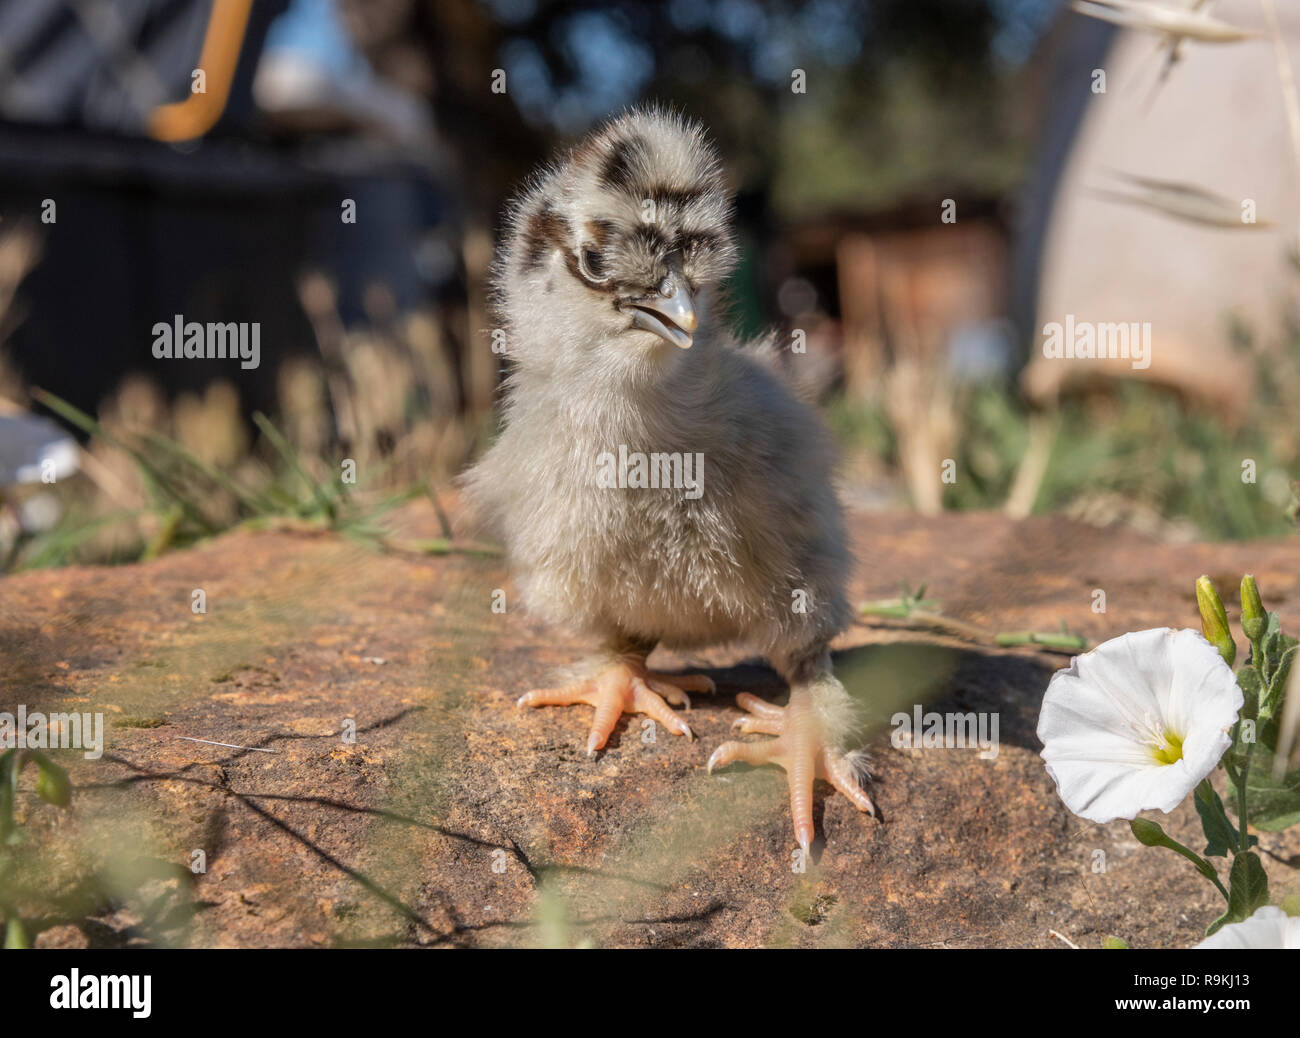 Baby chick in yard vegetation Stock Photo